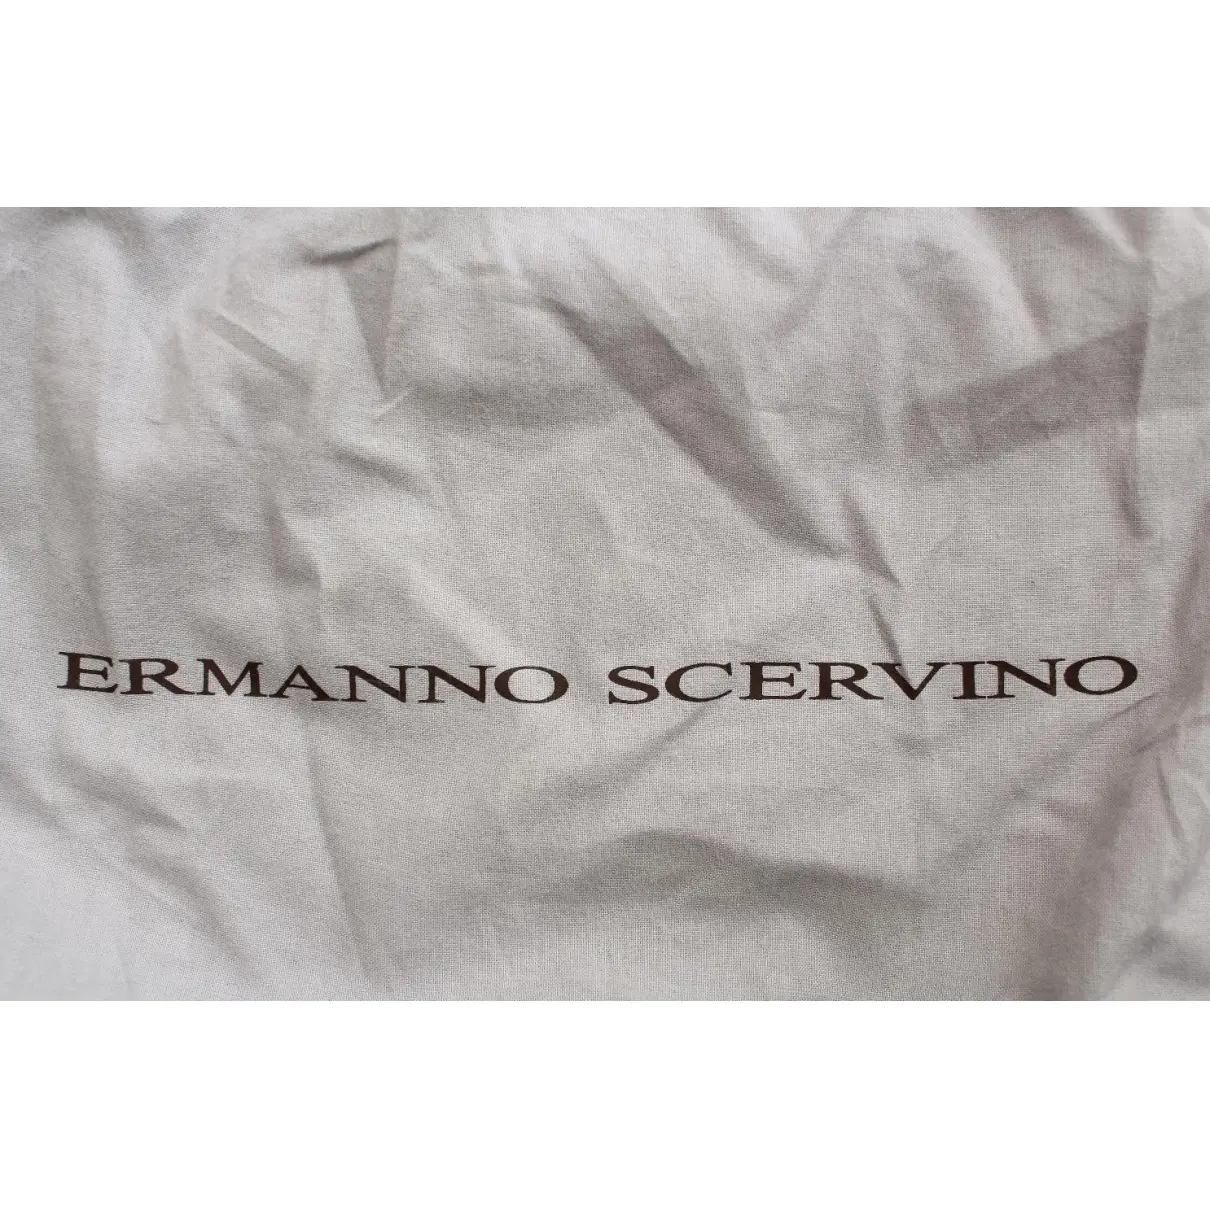 Leather bag Ermanno Scervino